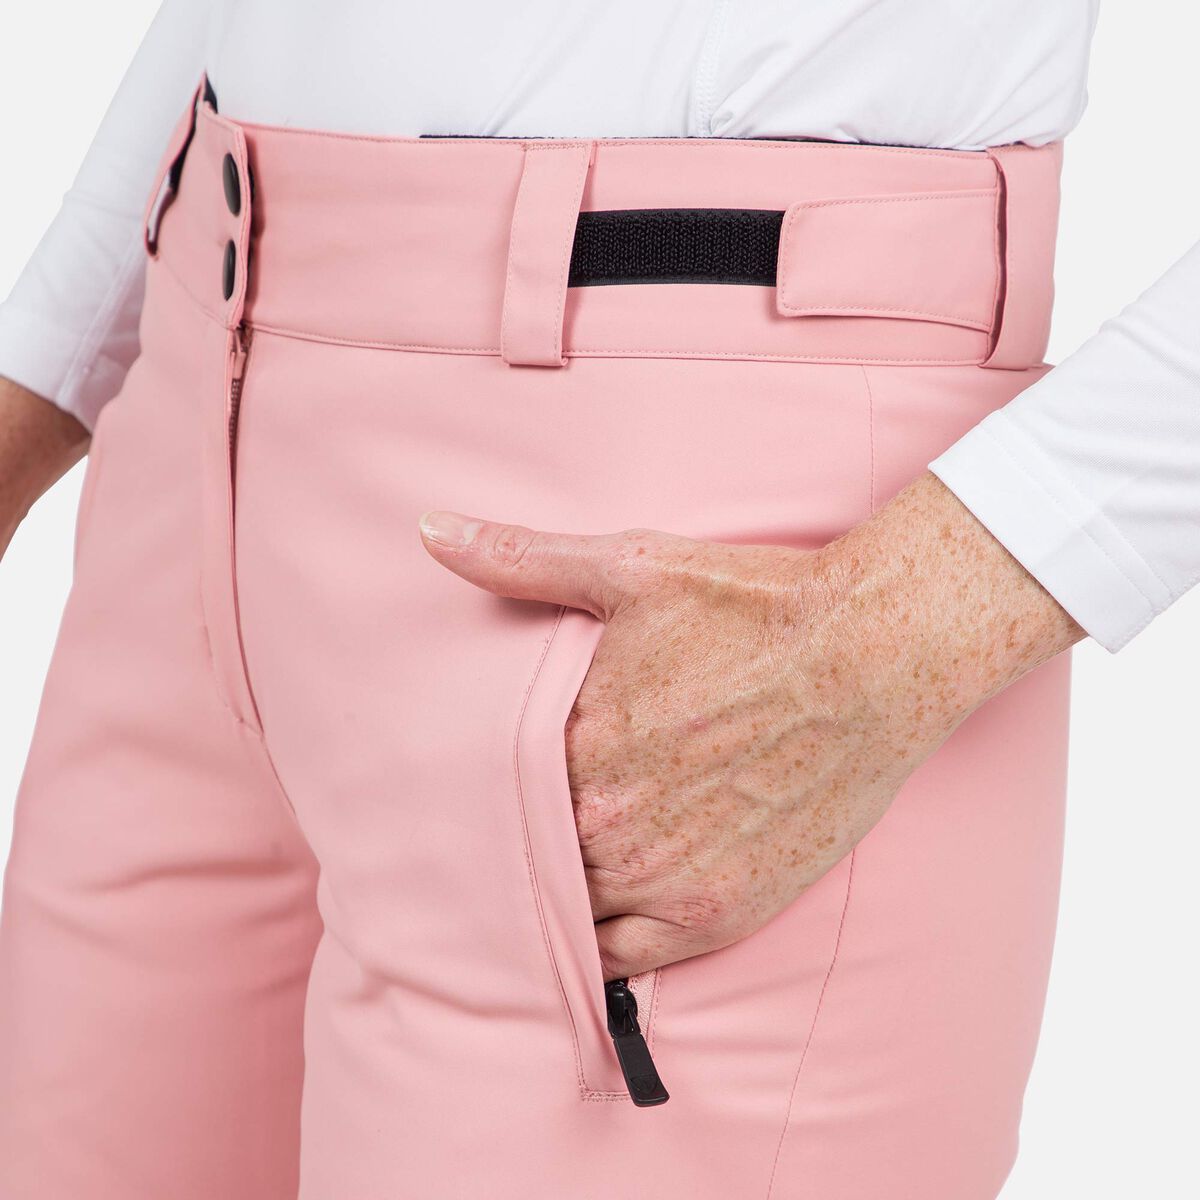 Rossignol Women's Staci Ski Pants pinkpurple